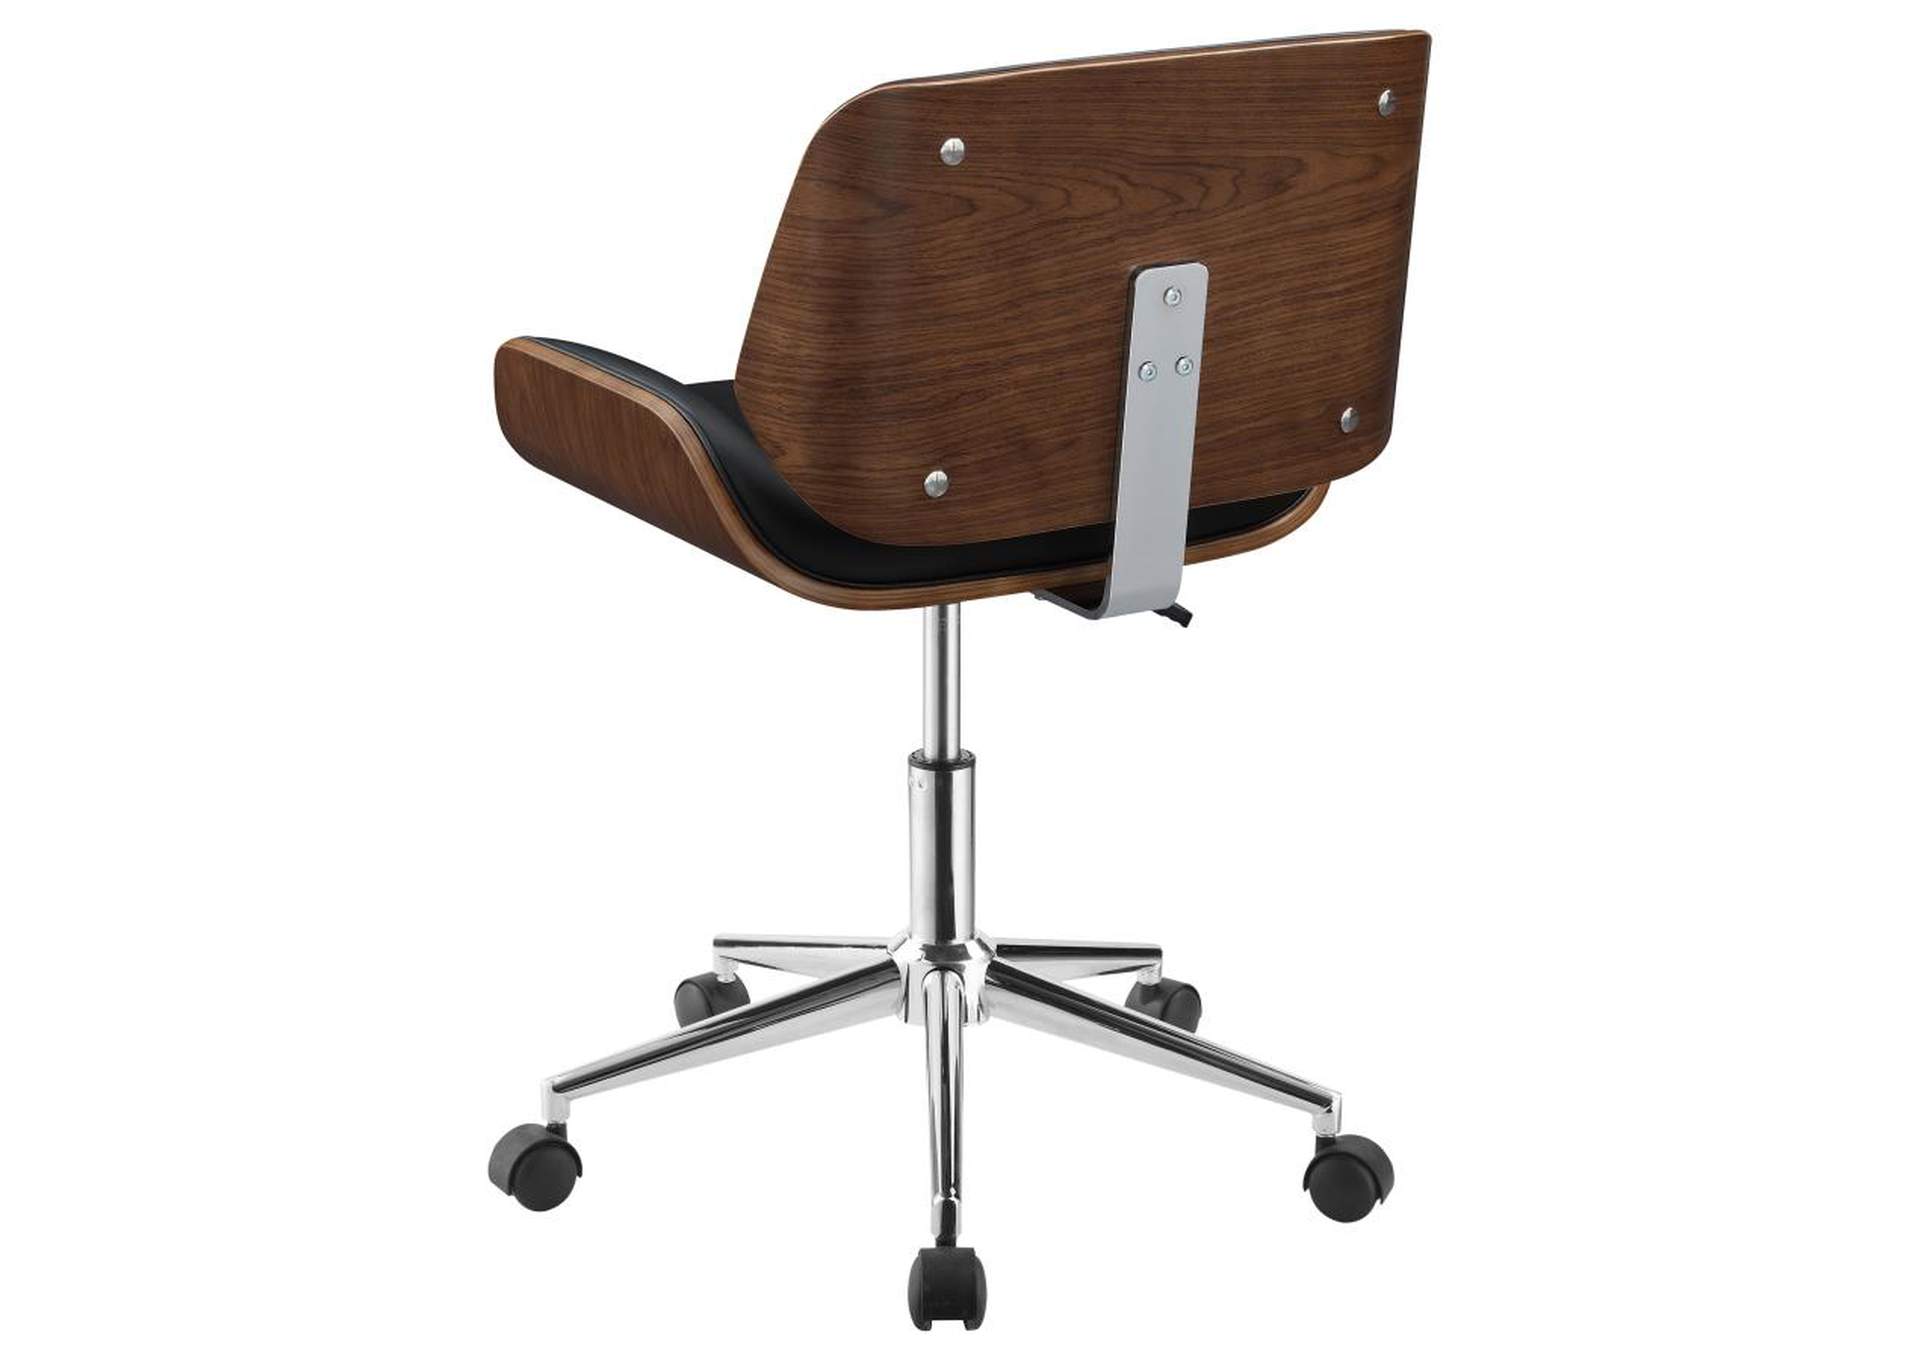 Addington Adjustable Height Office Chair Black And Chrome,Coaster Furniture